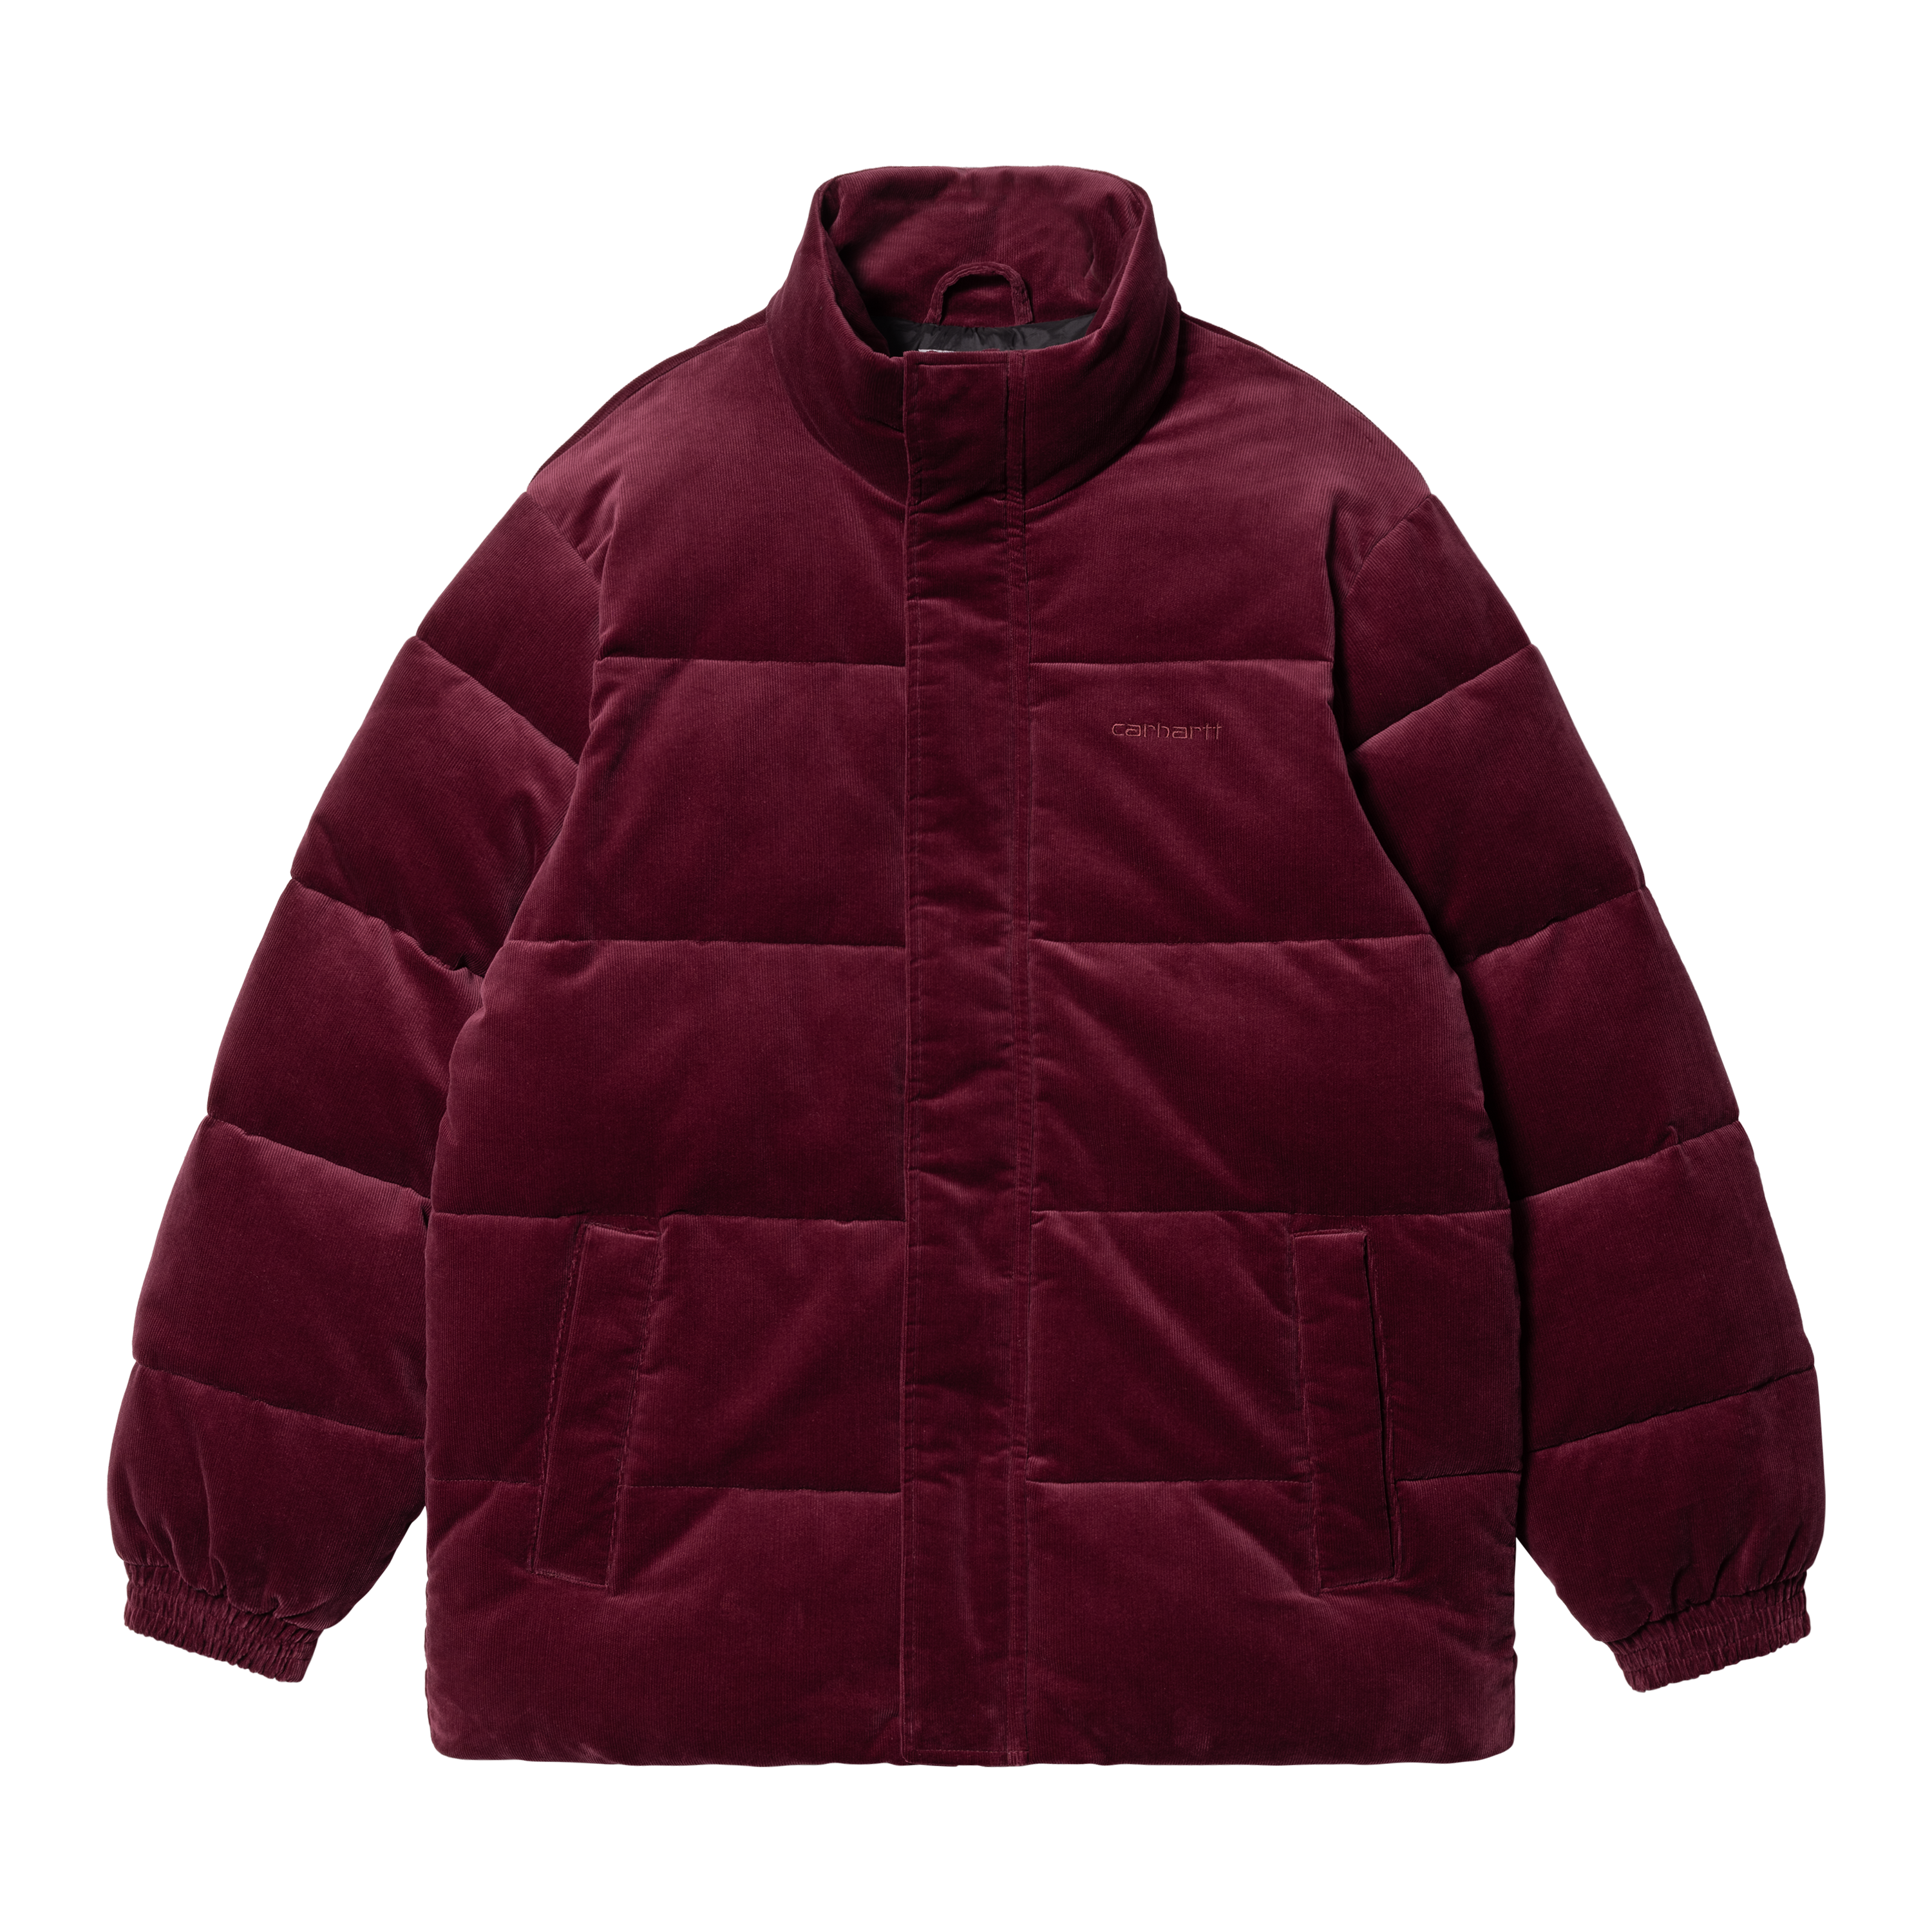 Carhartt WIP Layton Jacket in Rot